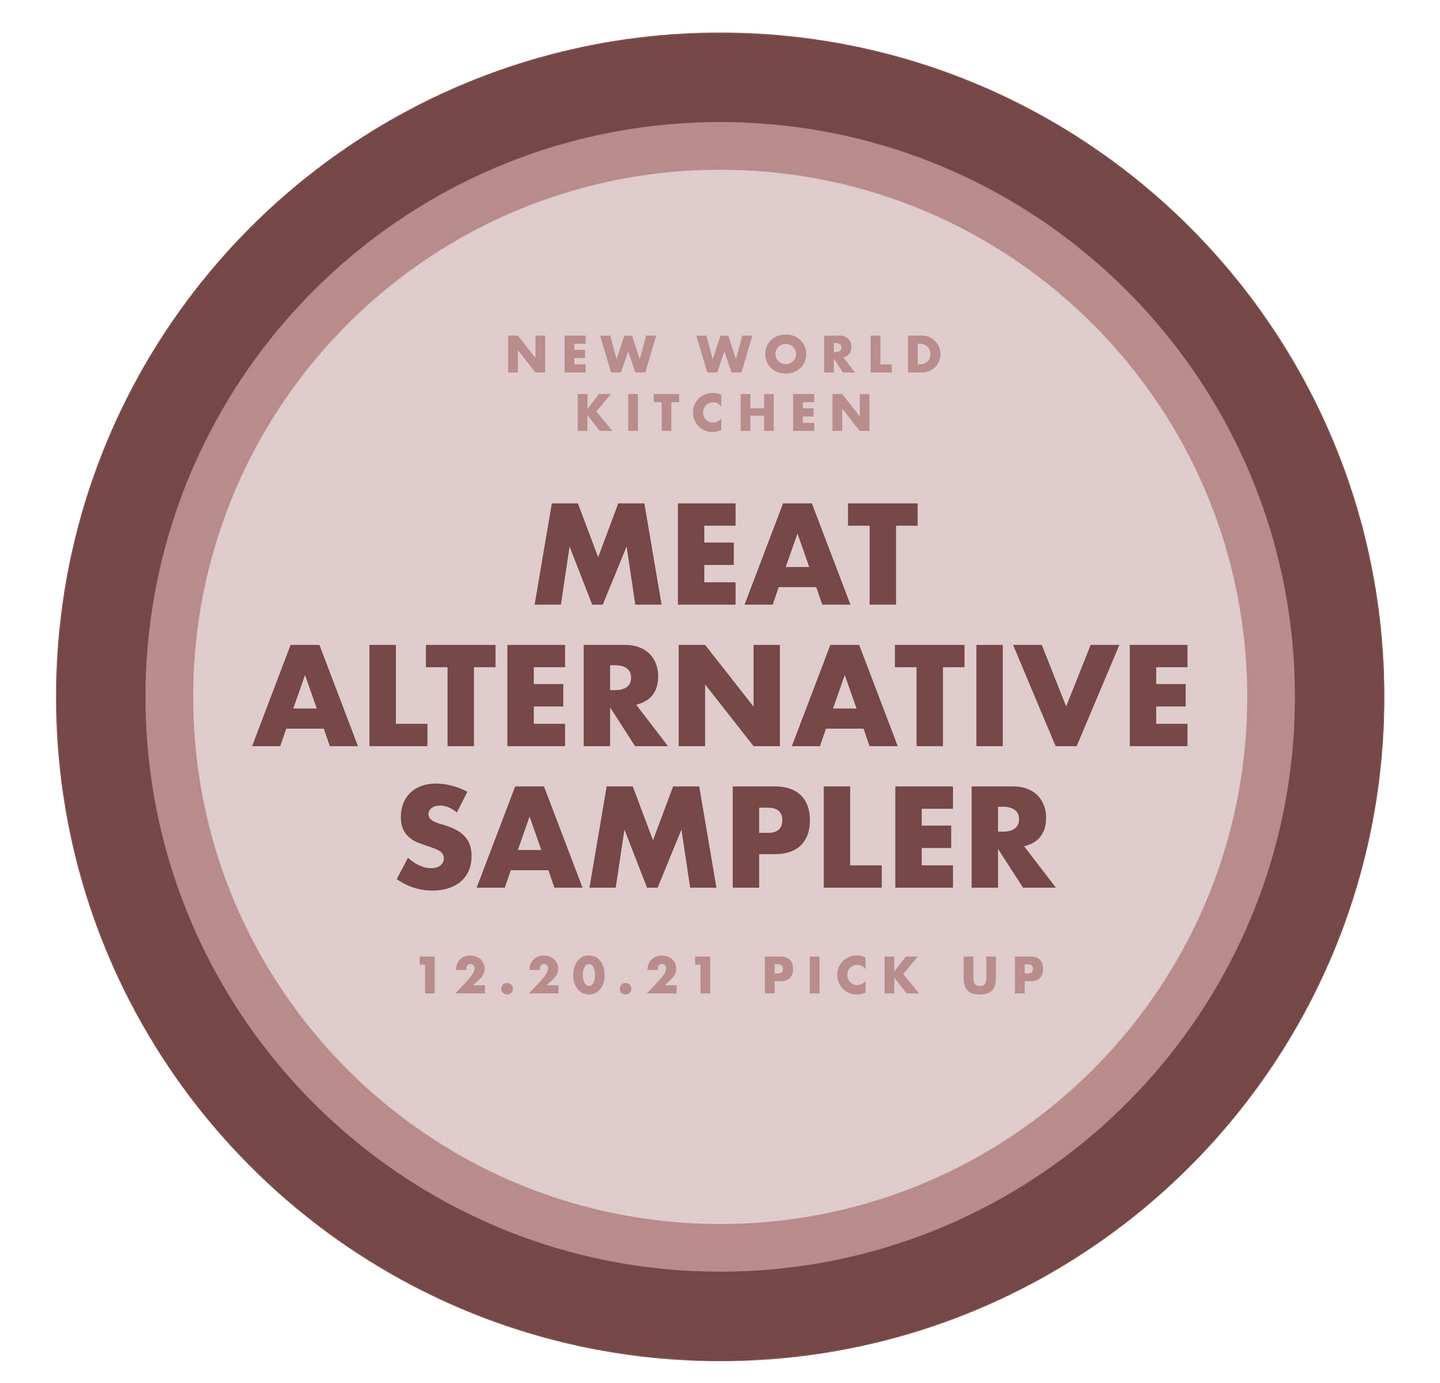 Vegan Meat Alternative Sampler in Des Moines, Iowa